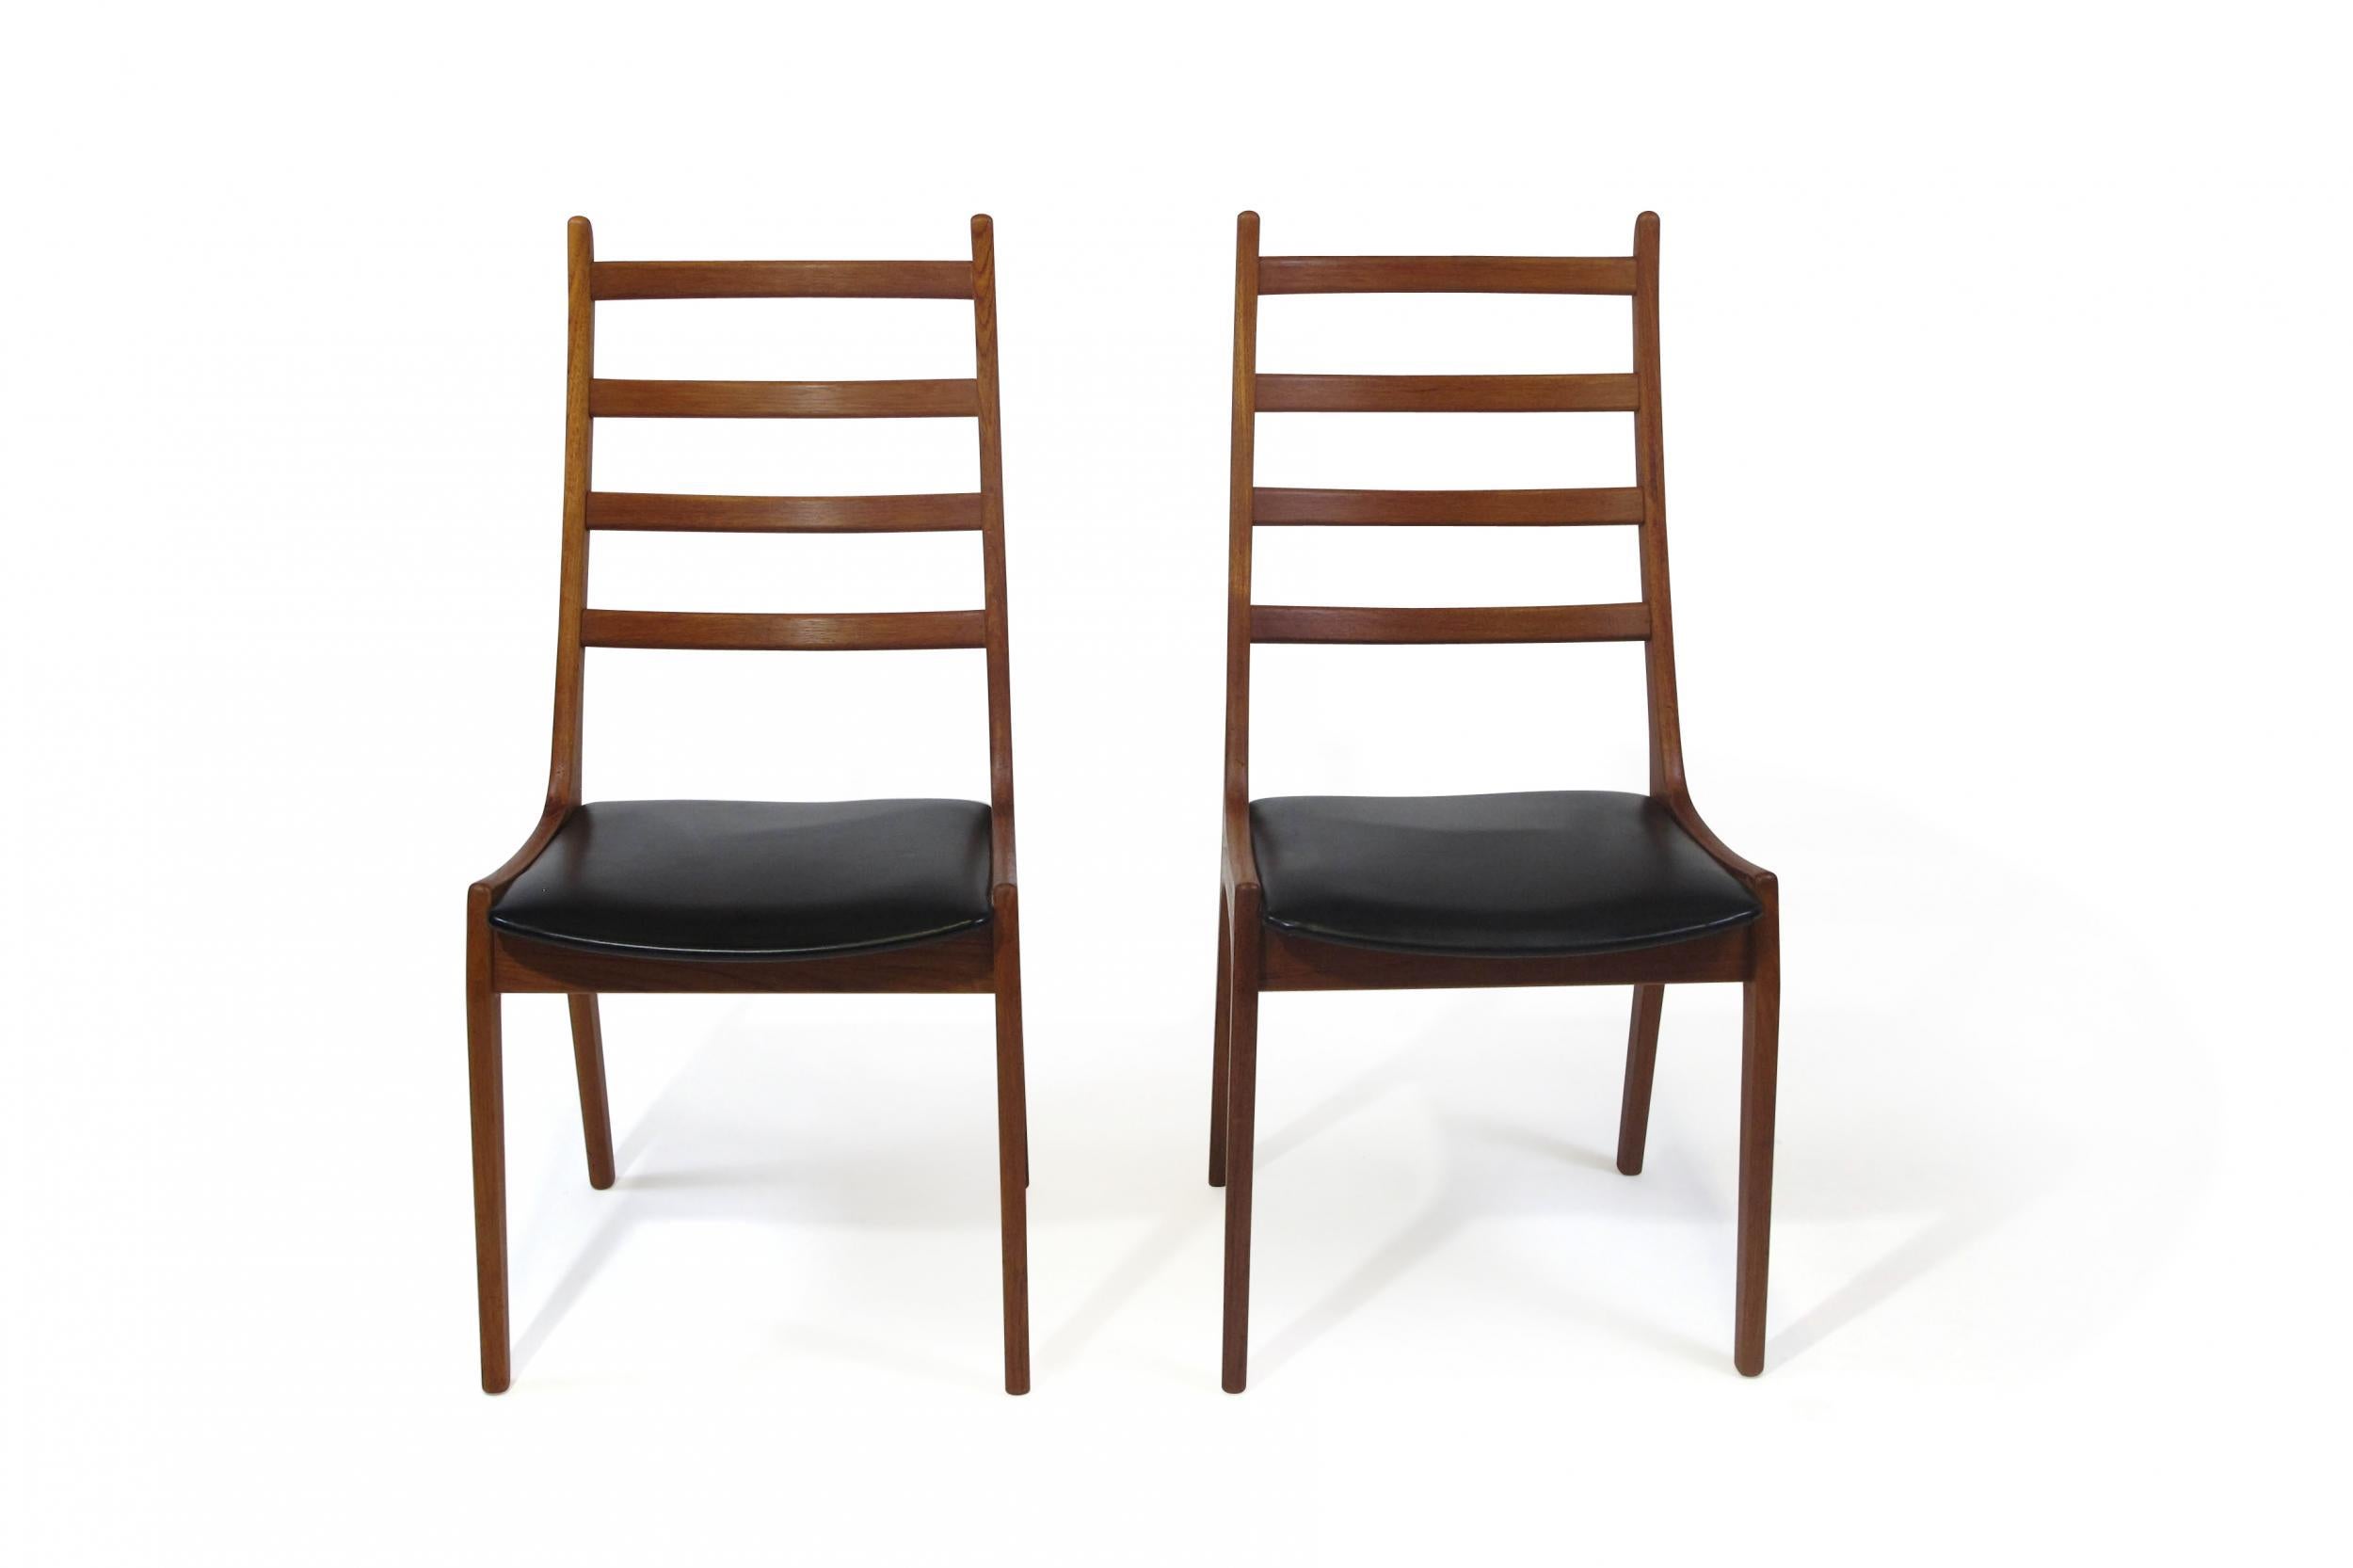 Korup Stolefabrik Danish Teak High-Back Dining Chairs 1